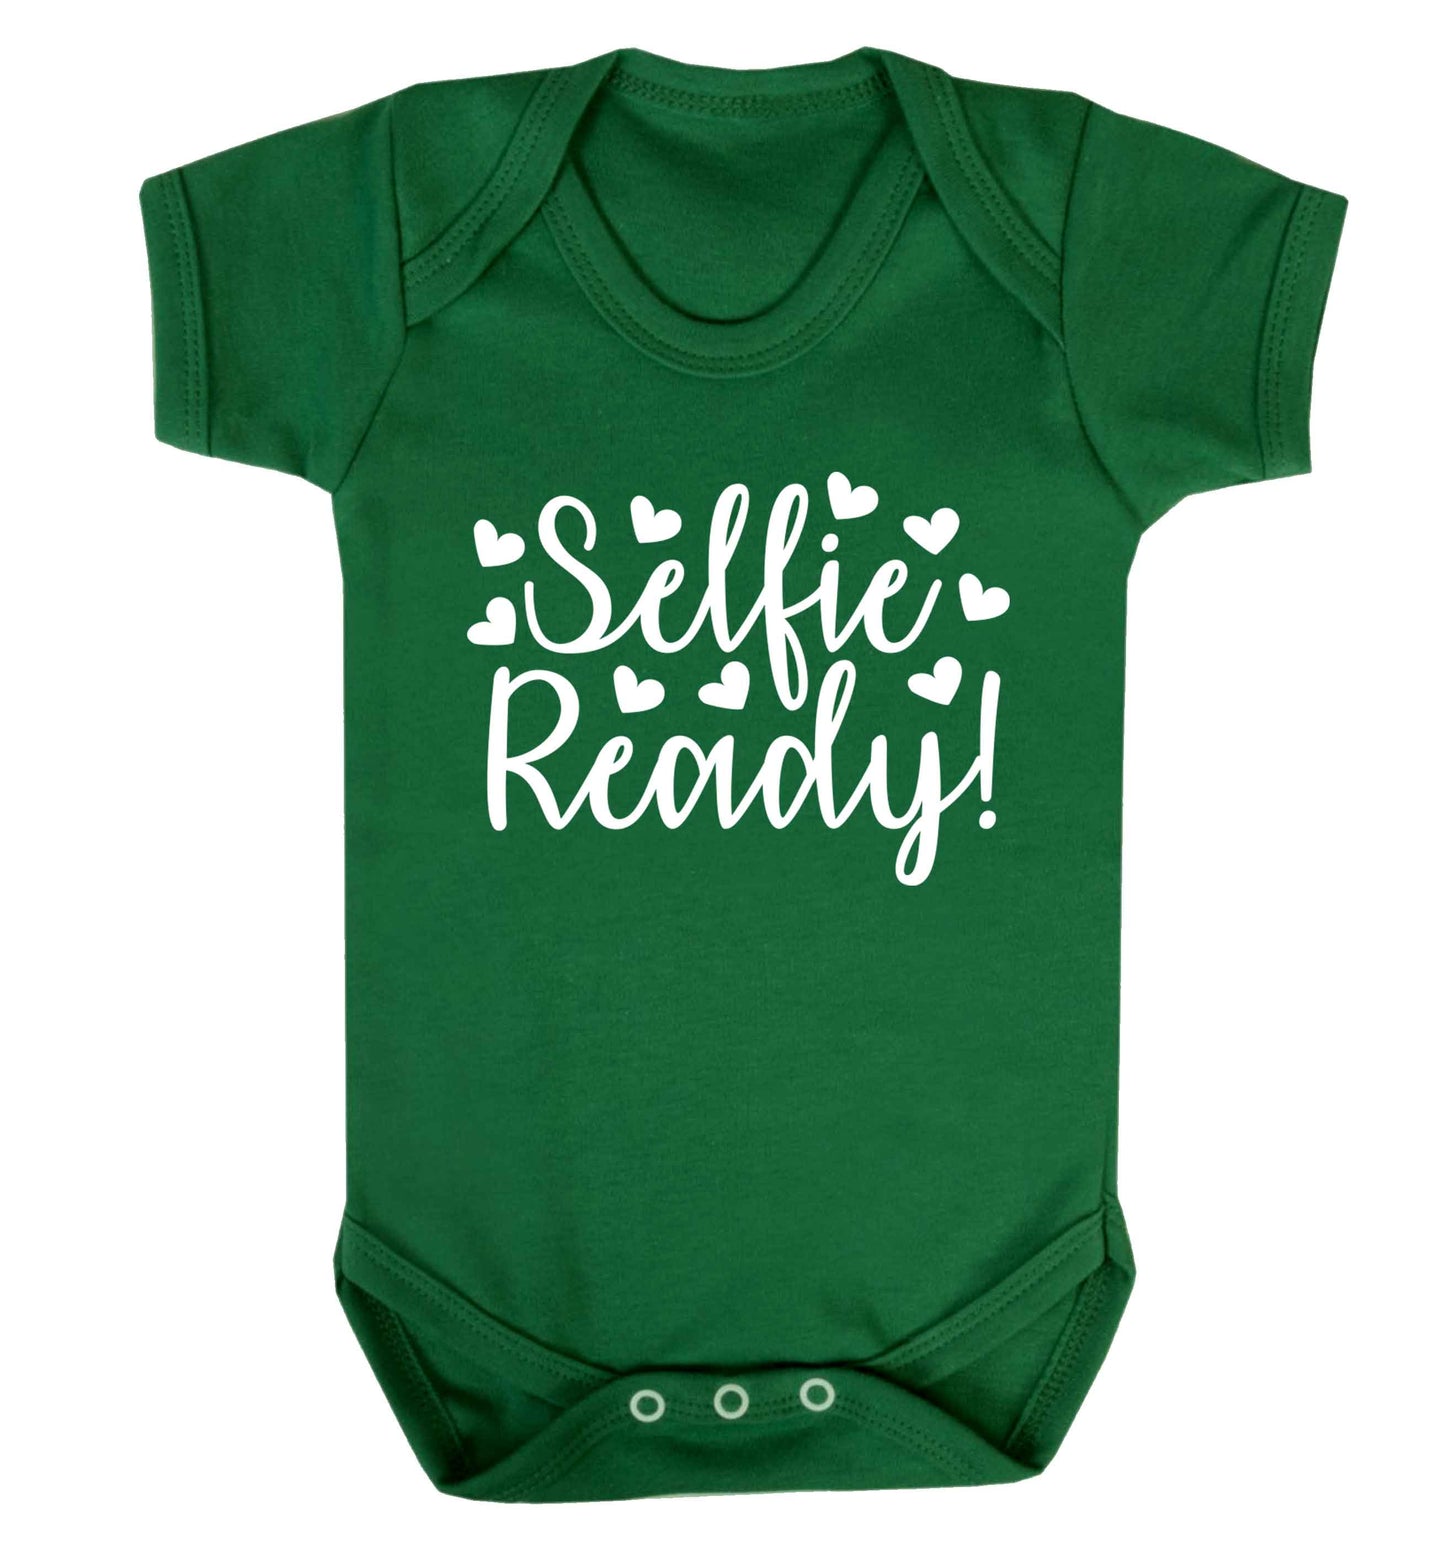 Selfie ready Baby Vest green 18-24 months